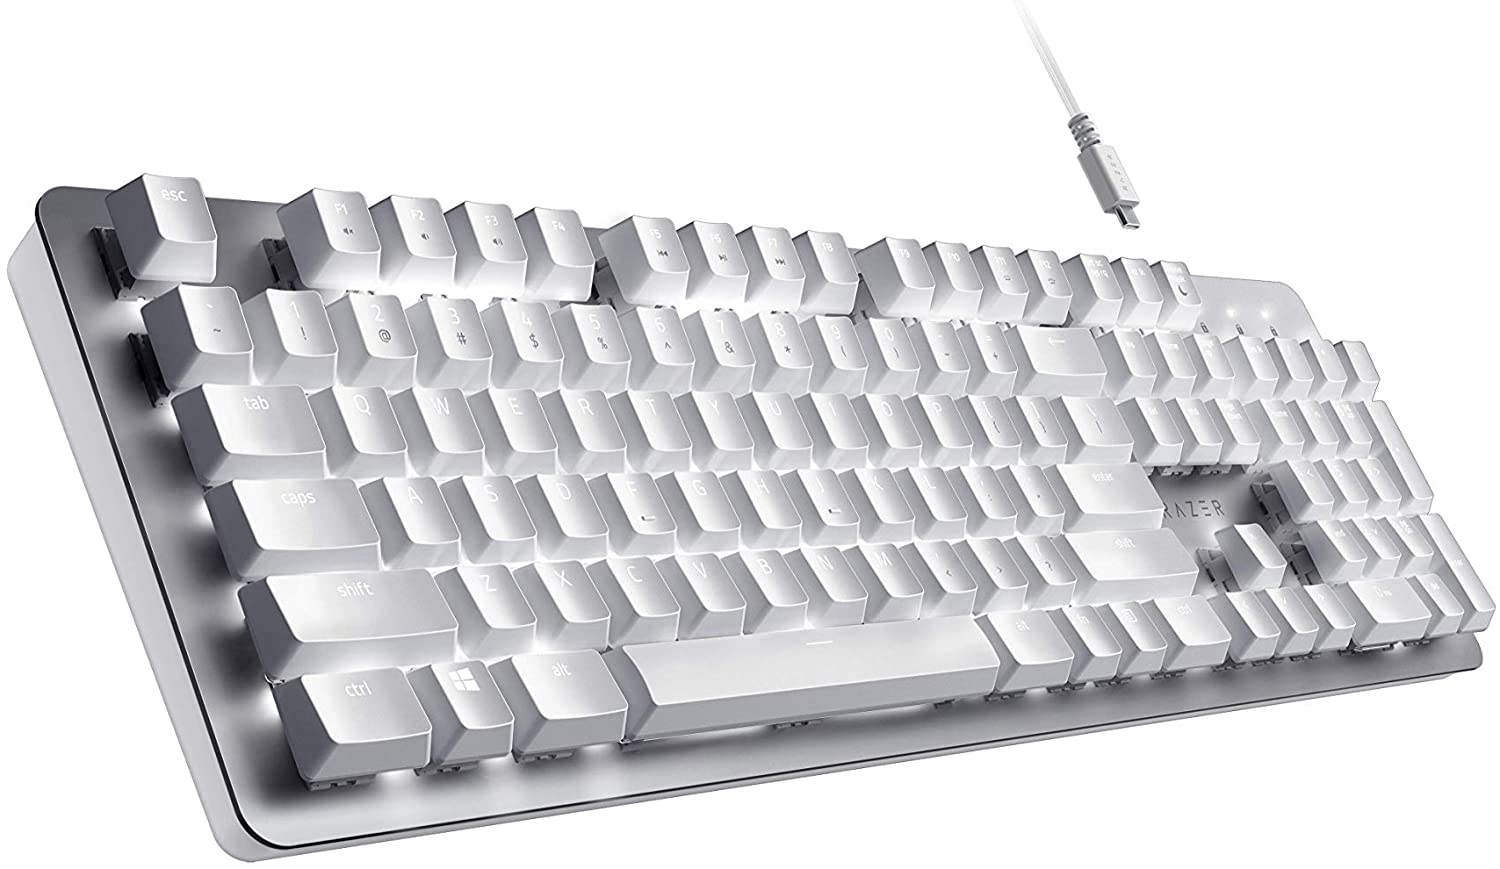 Razer-Pro-Type-mechanical-keyboard